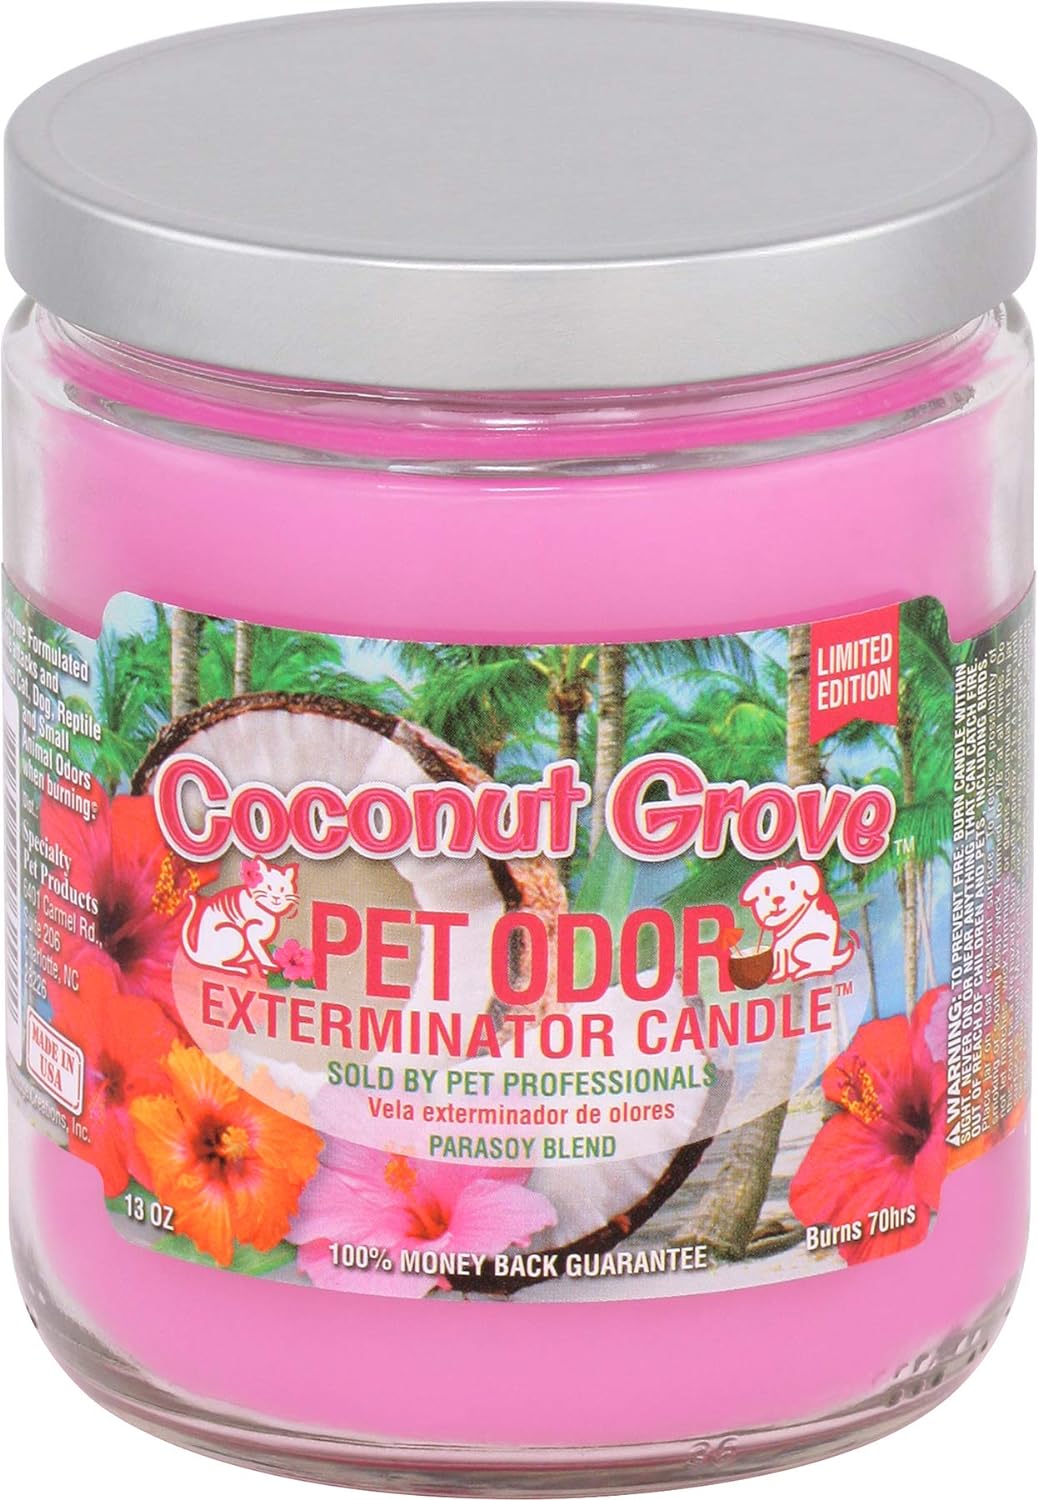 Pet Odor Exterminators - Coconut Grove